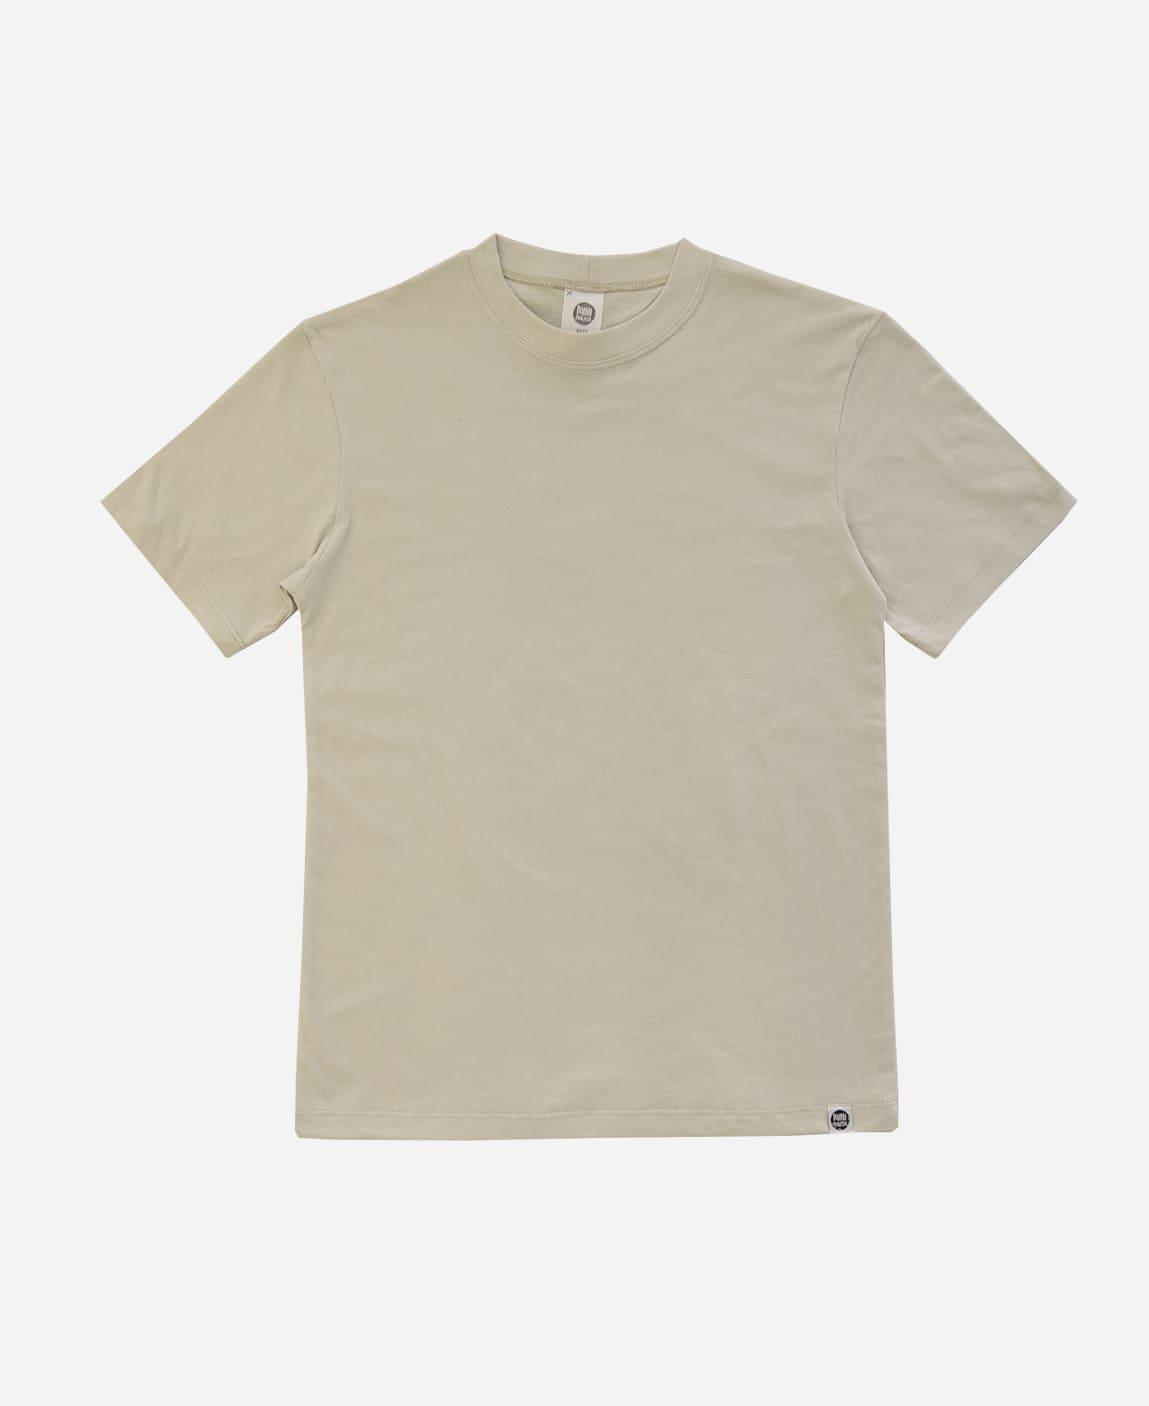 Camiseta Adulto Unissex Liso Stone - MiniMalista Baby - b2b, com-desconto-mm10, Meia Estação, Menino, minime, Neutro, new, tab-tam-cam-adulto-2, Unissex -bebê-minimalista-estiloso